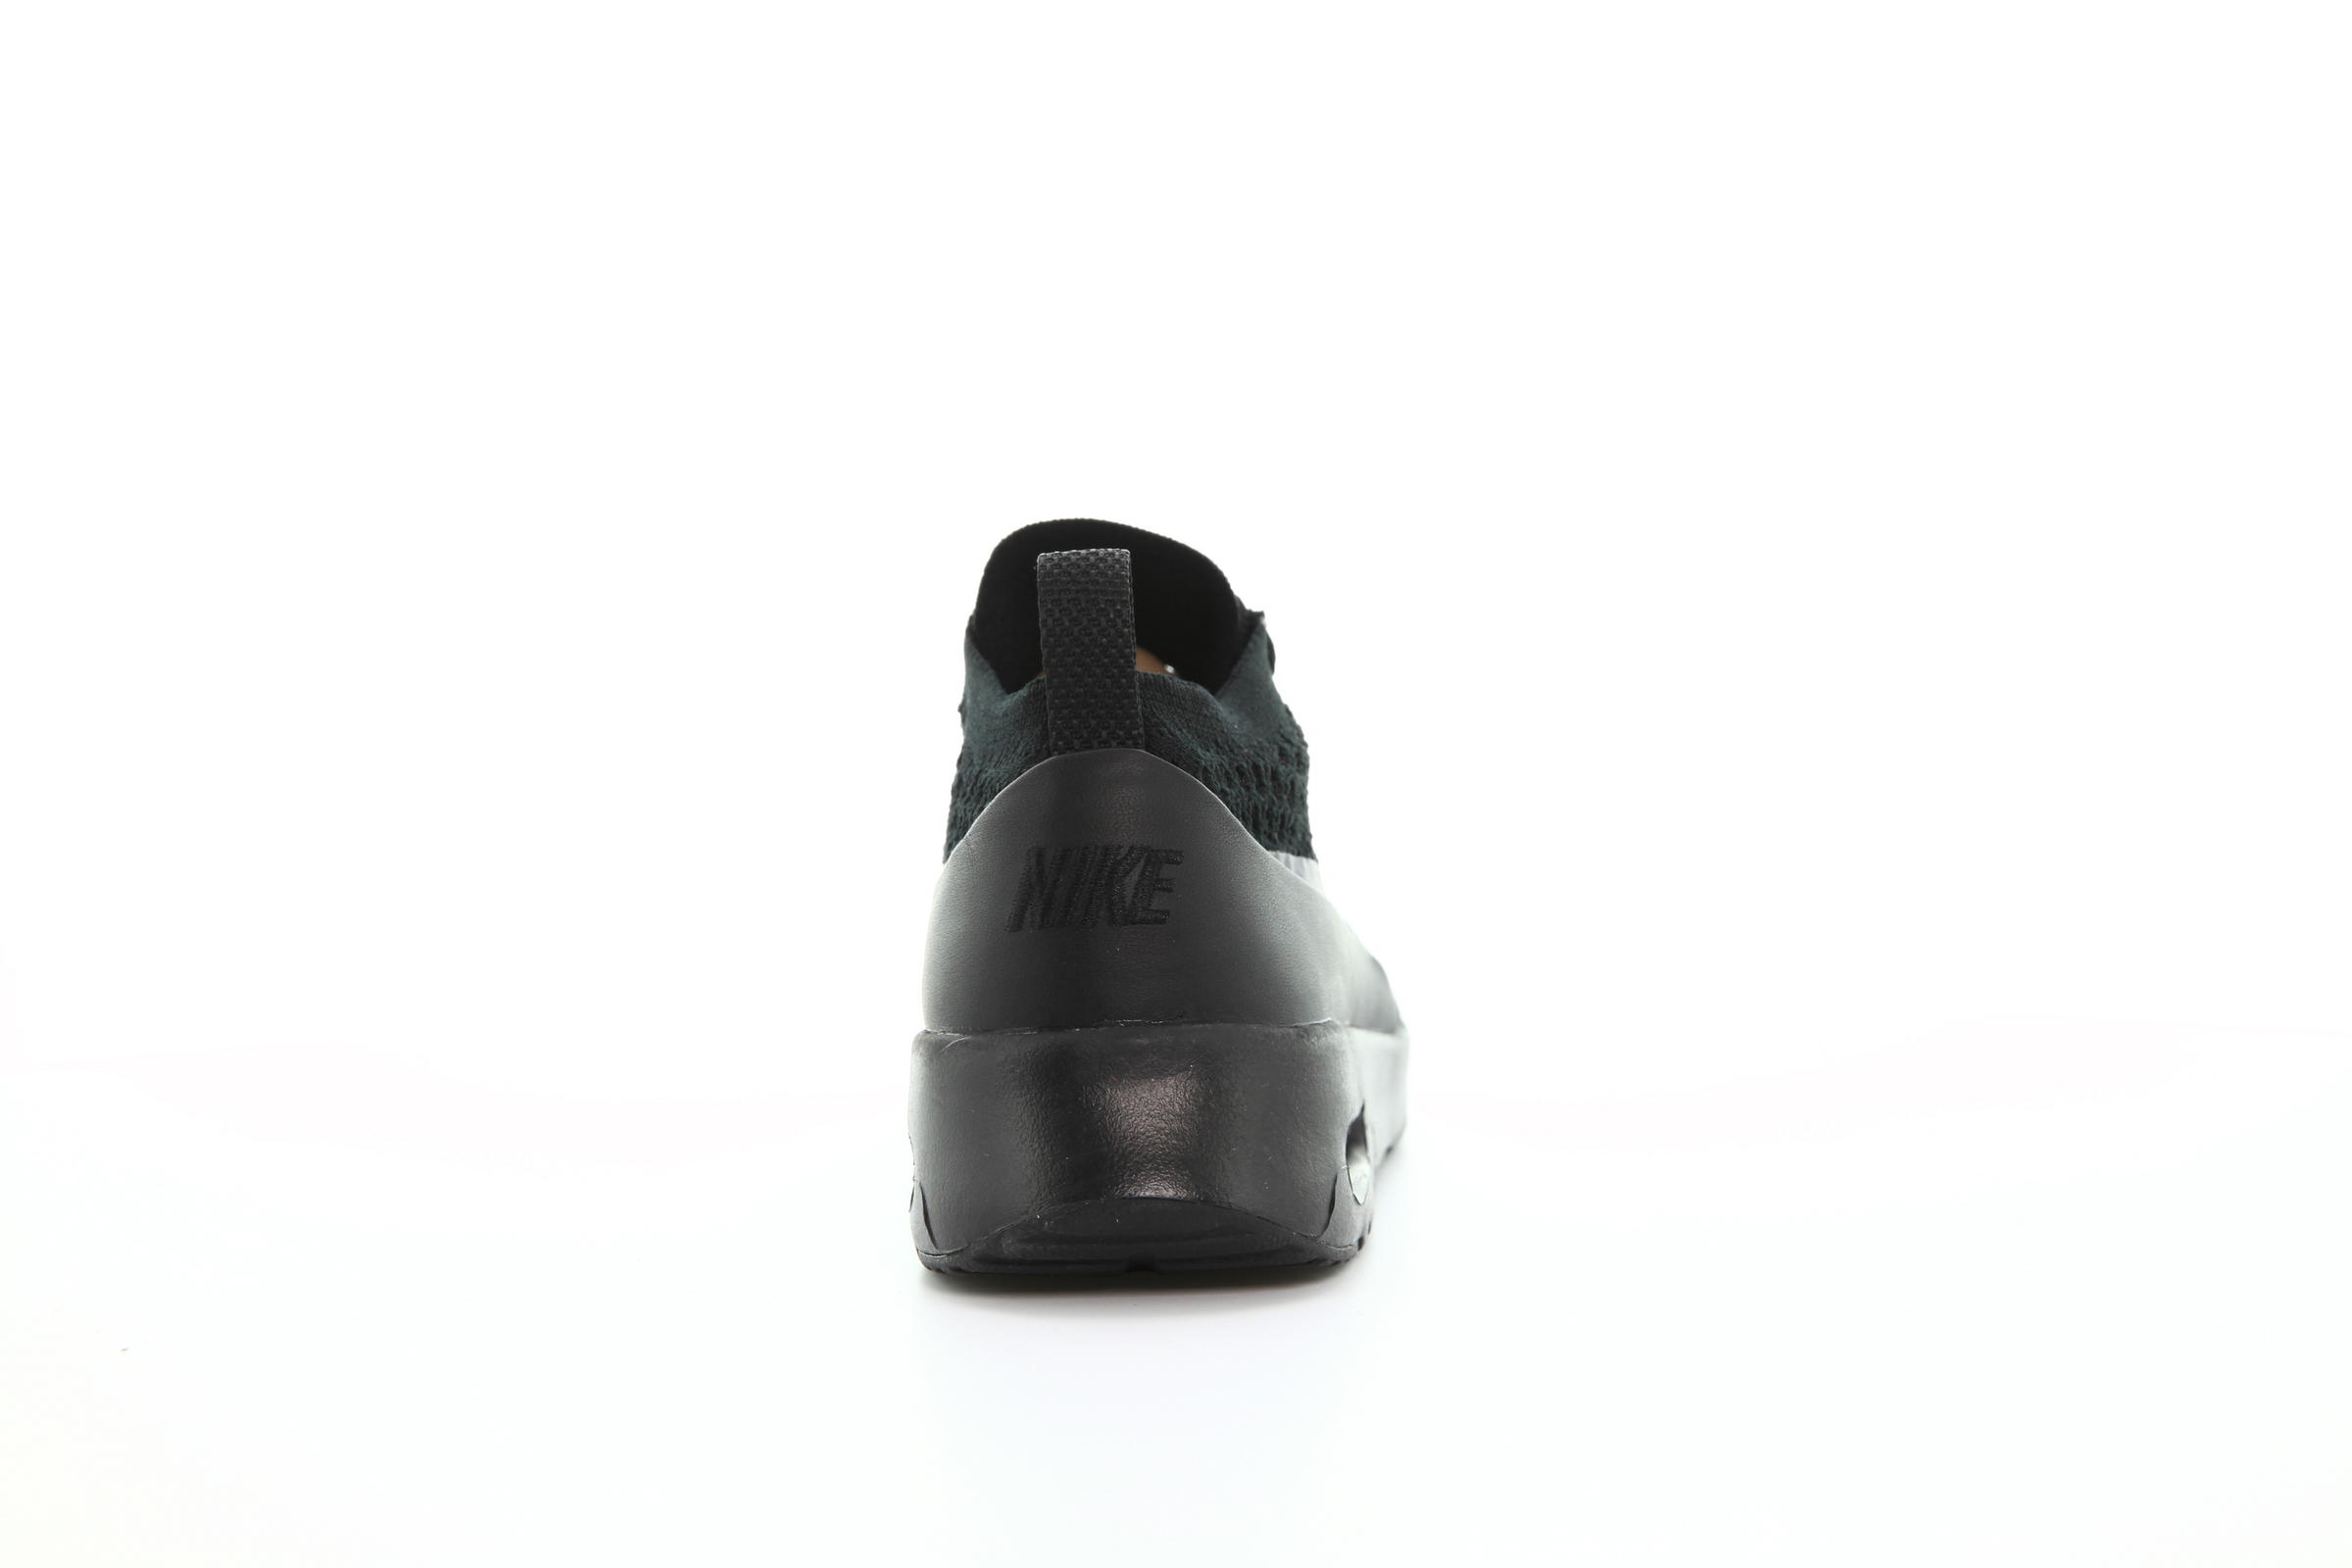 Nike WMNS Air Max Thea Ultra Flyknit "Black"